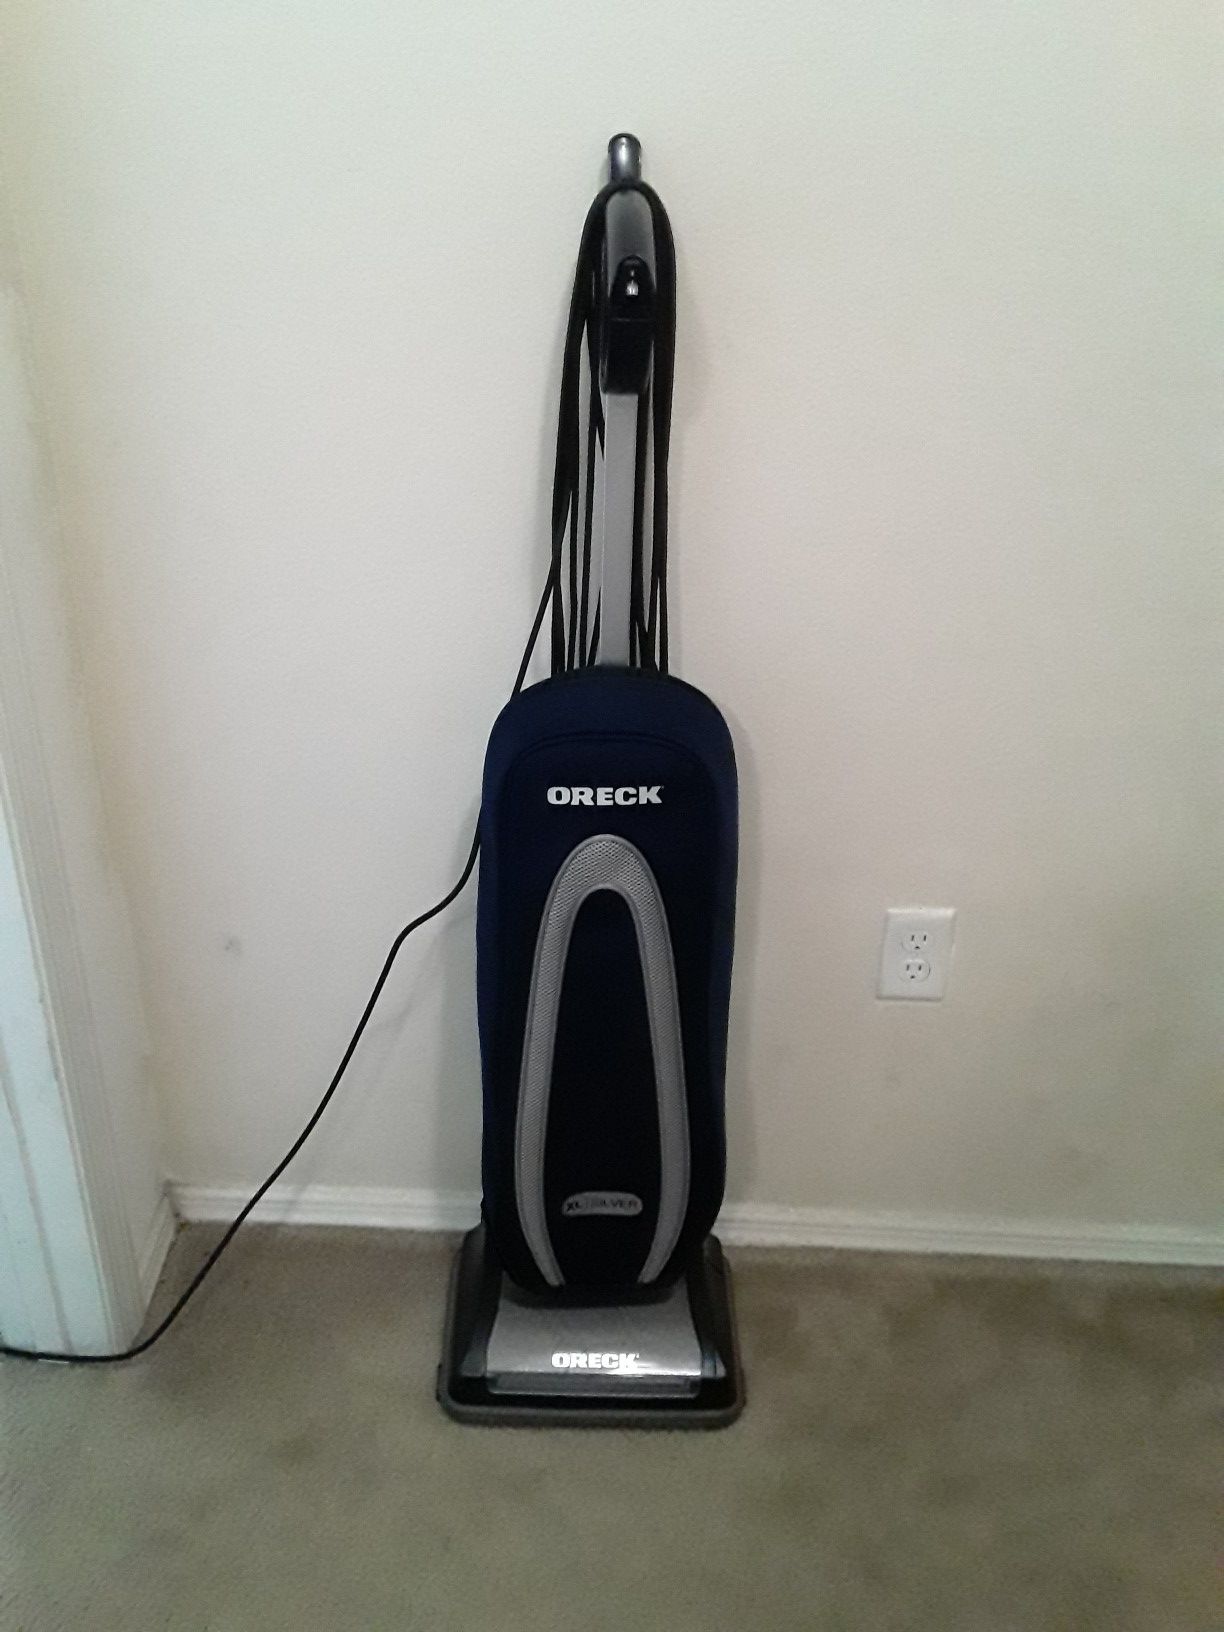 Oreck XL silver vacuum cleaner